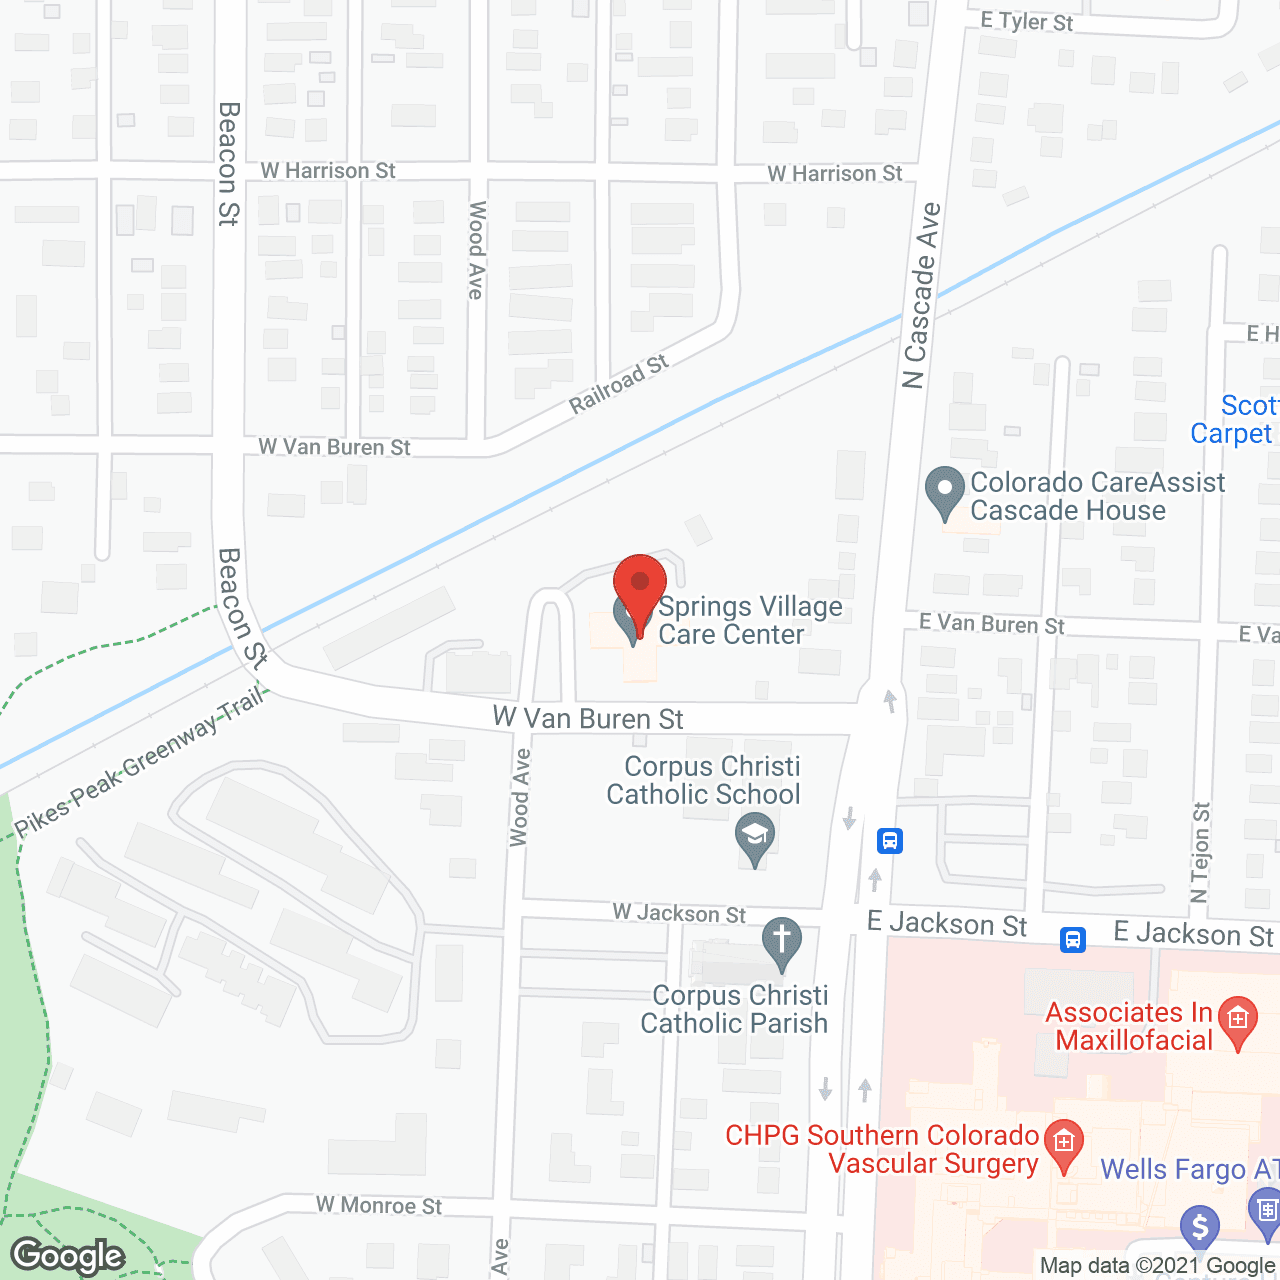 Springs Village Care Center in google map